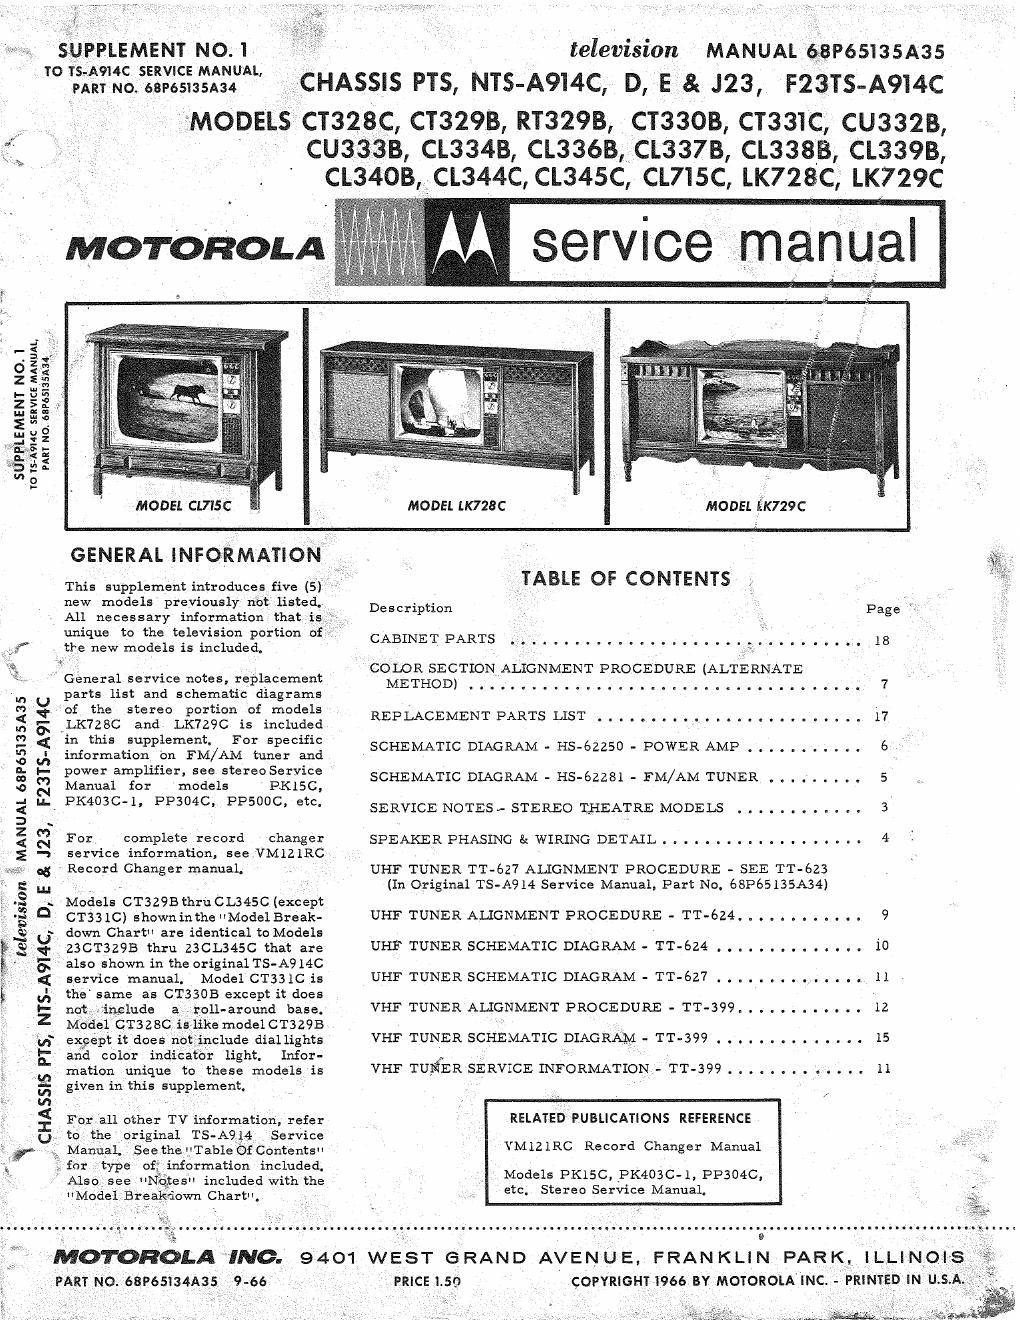 motorola cl 338 b service manual